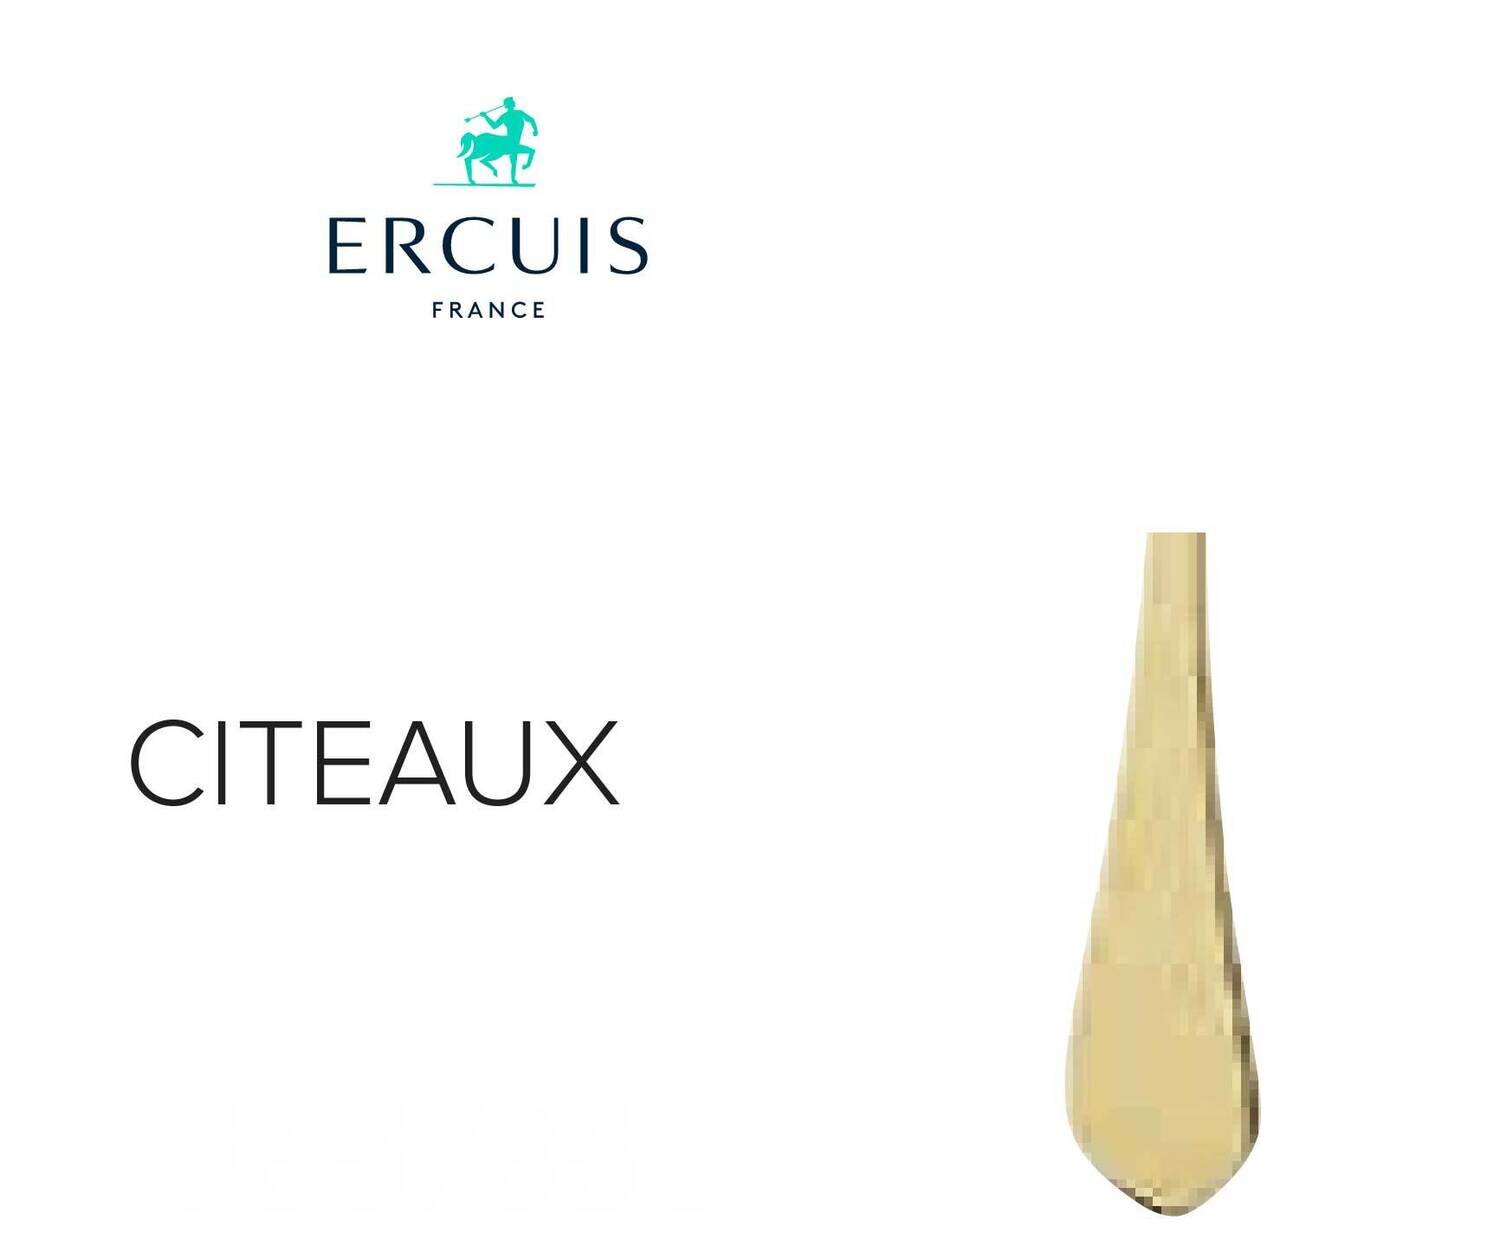 Ercuis Citeaux Sugar Tongs Gold Plated F657350-62